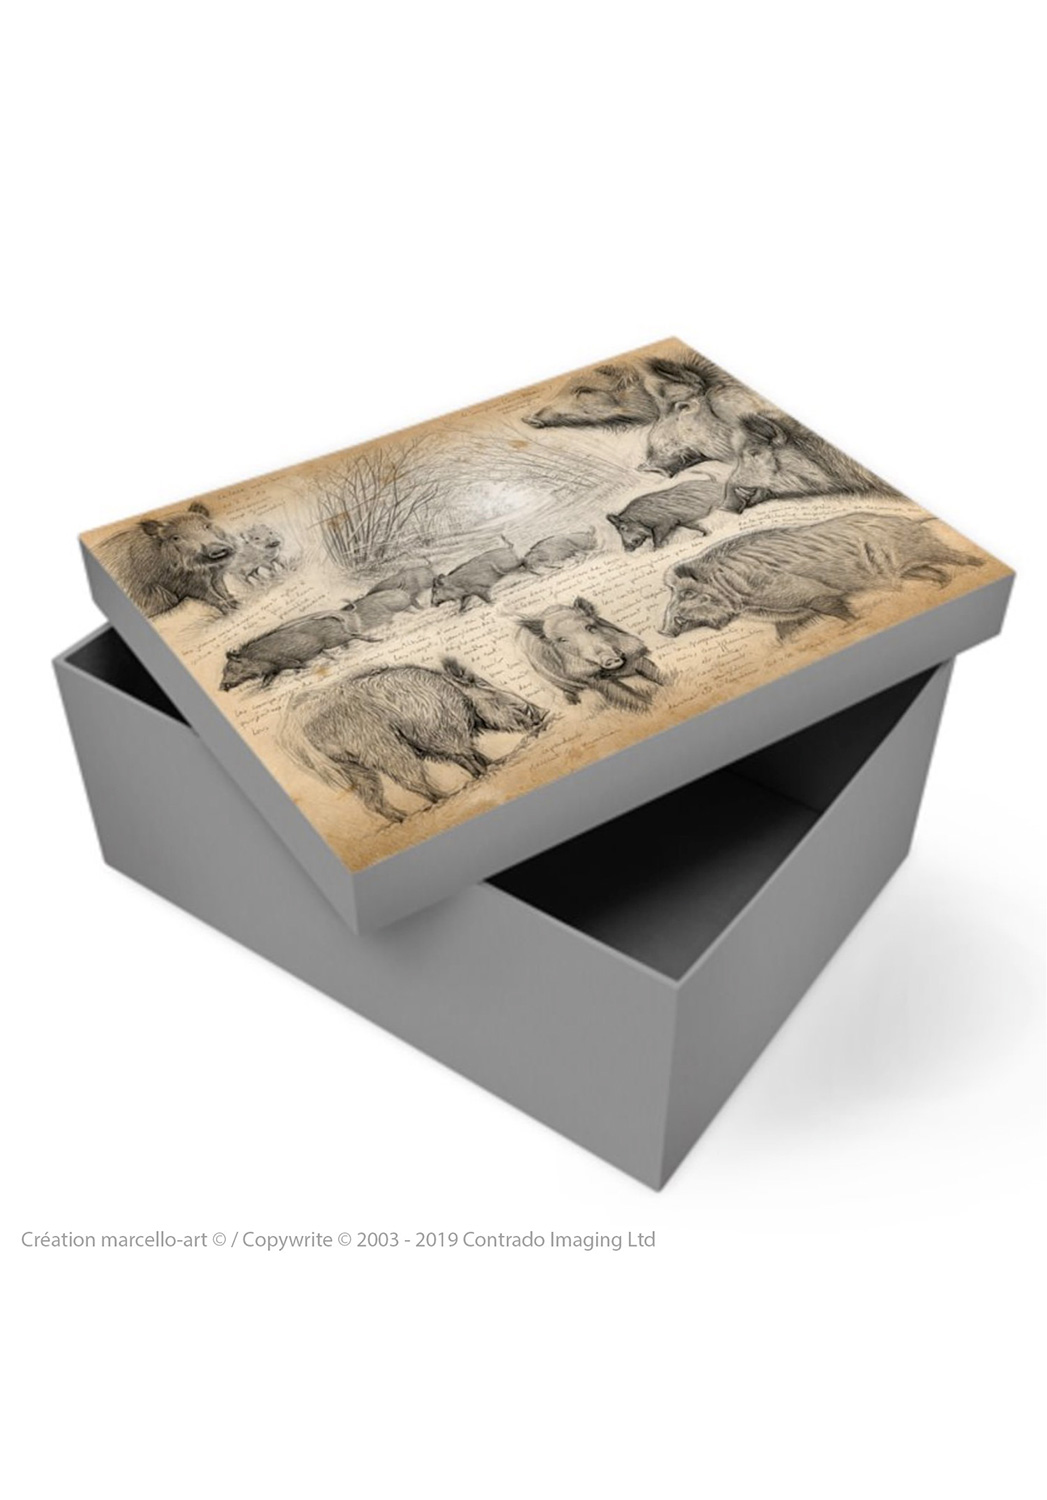 Marcello-art: Decoration accessoiries Souvenir box 272 boar